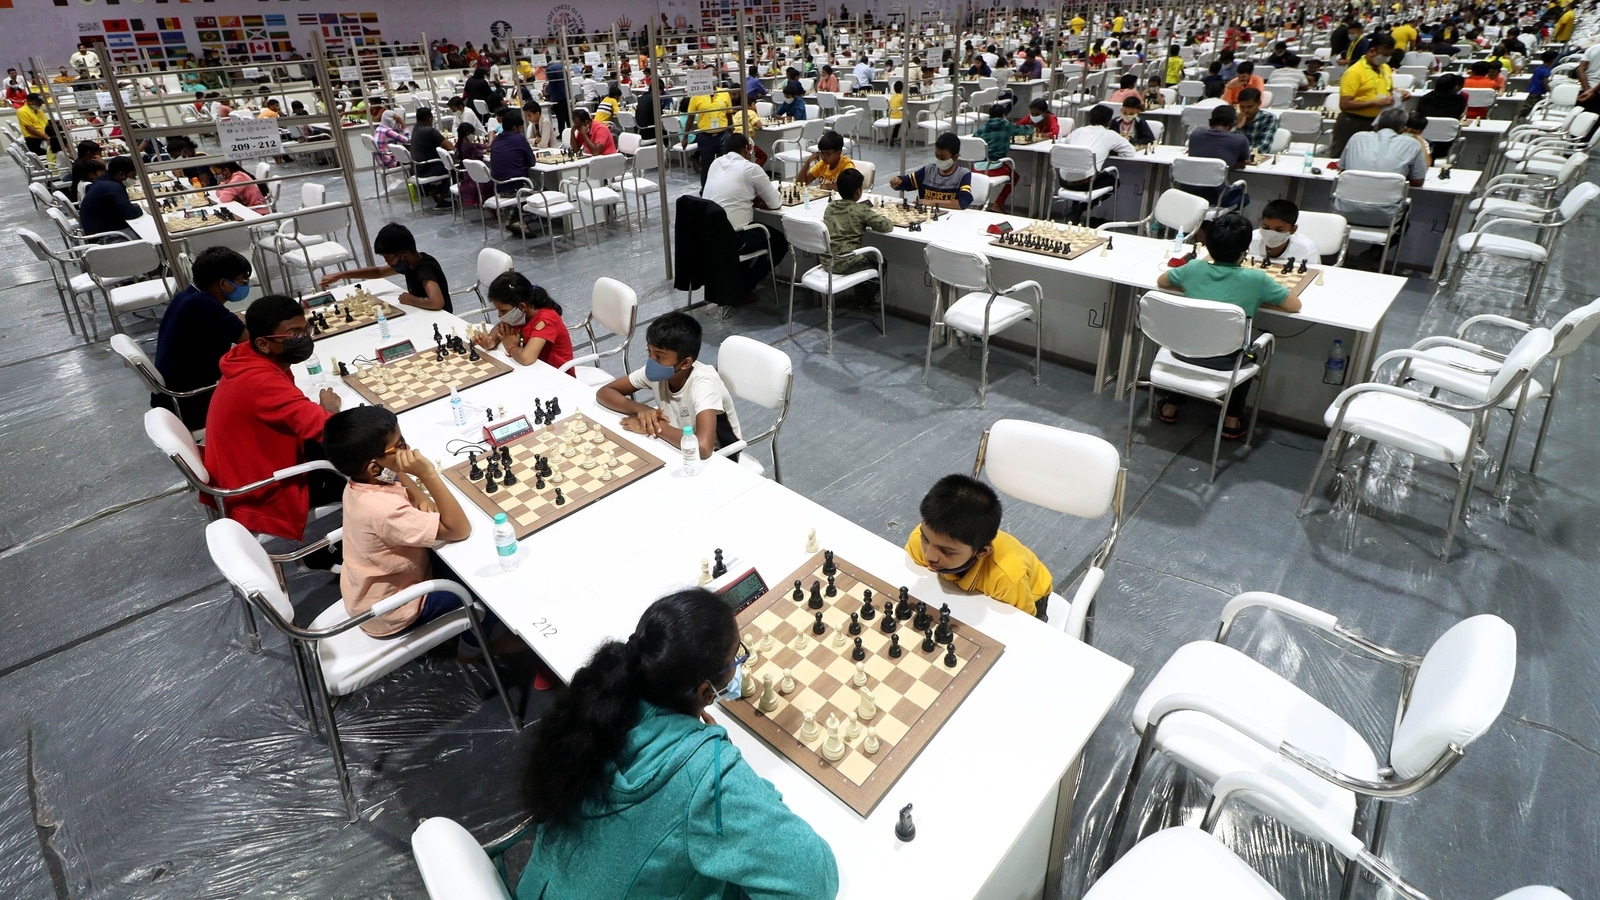 Chess Olympiad: Celebrating chess in Chennai